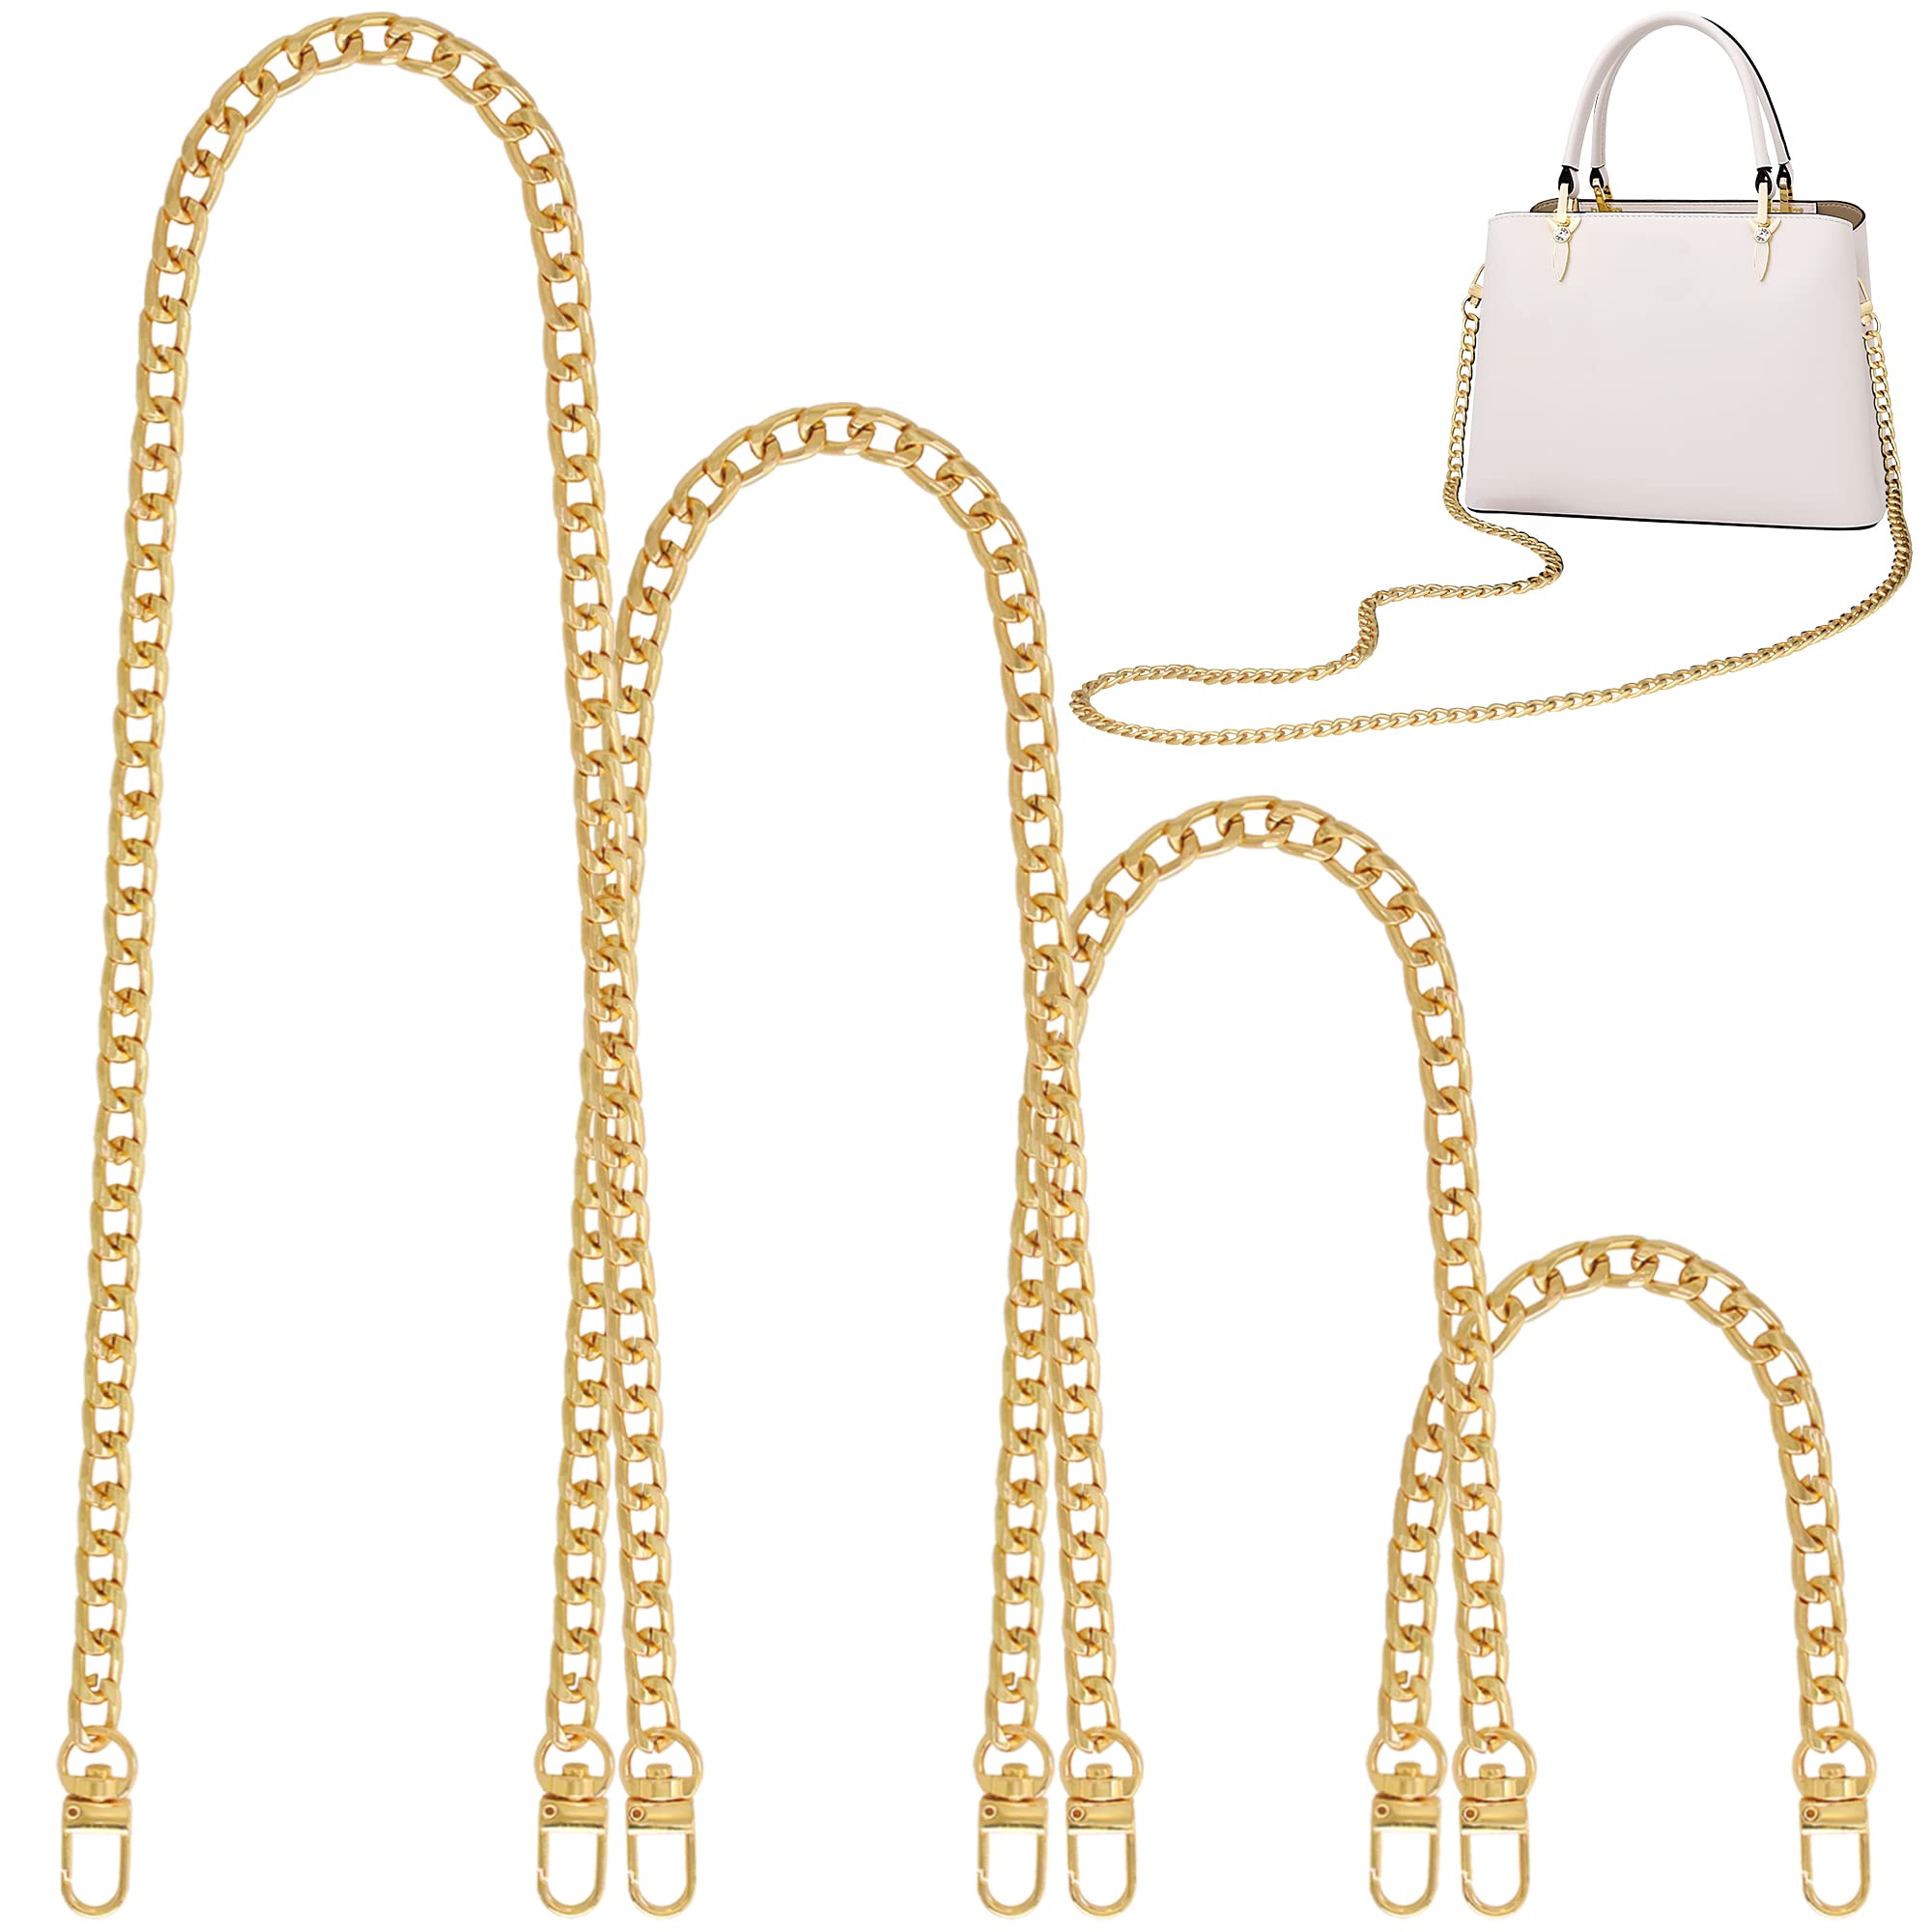 Gondiane 4 Sizes Flat Purse Chain Strap Crossbody Bag Replacement